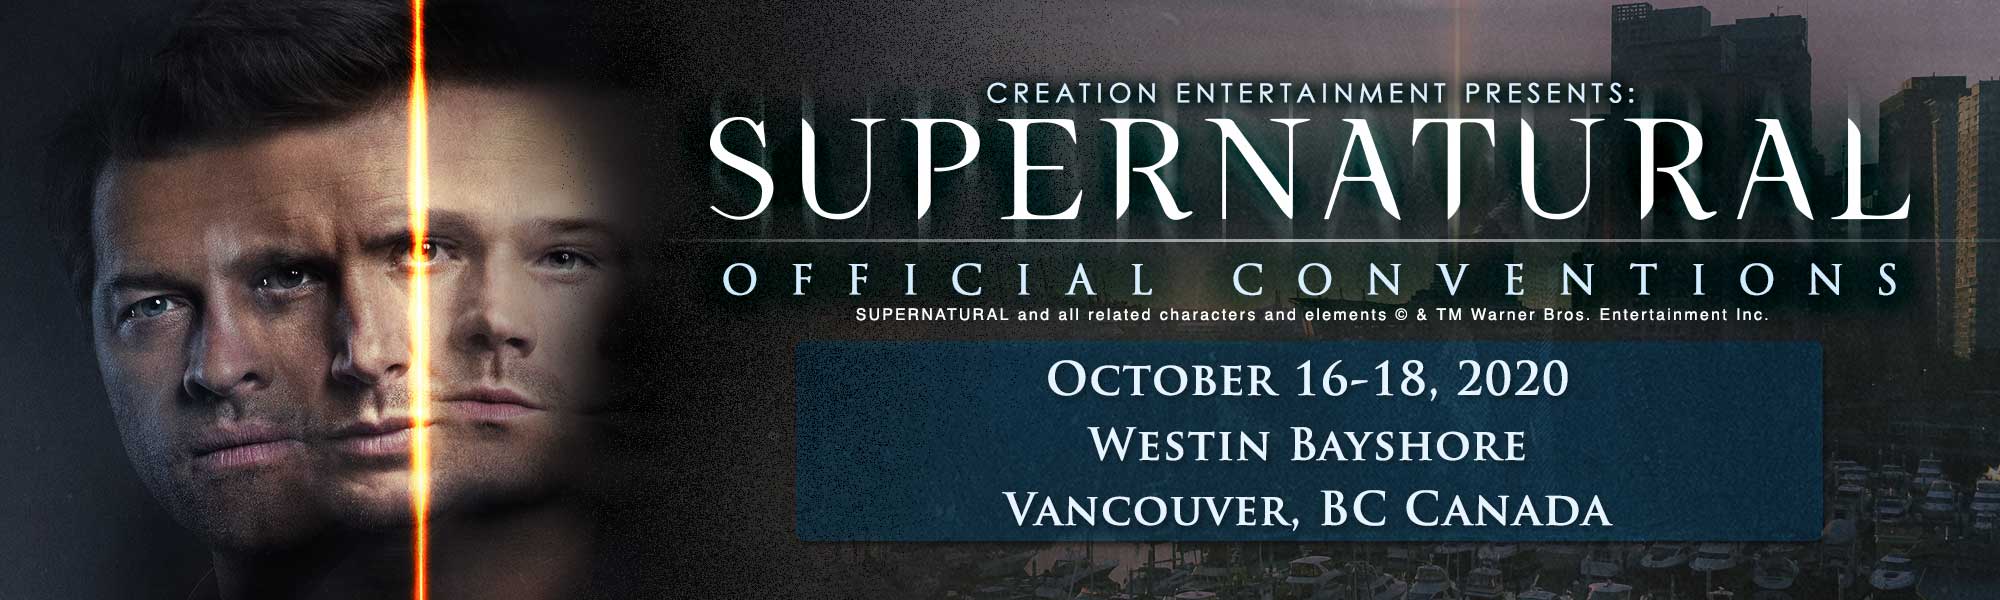 Supernatural Convention Event Vancouver, BC Creation Entertainment